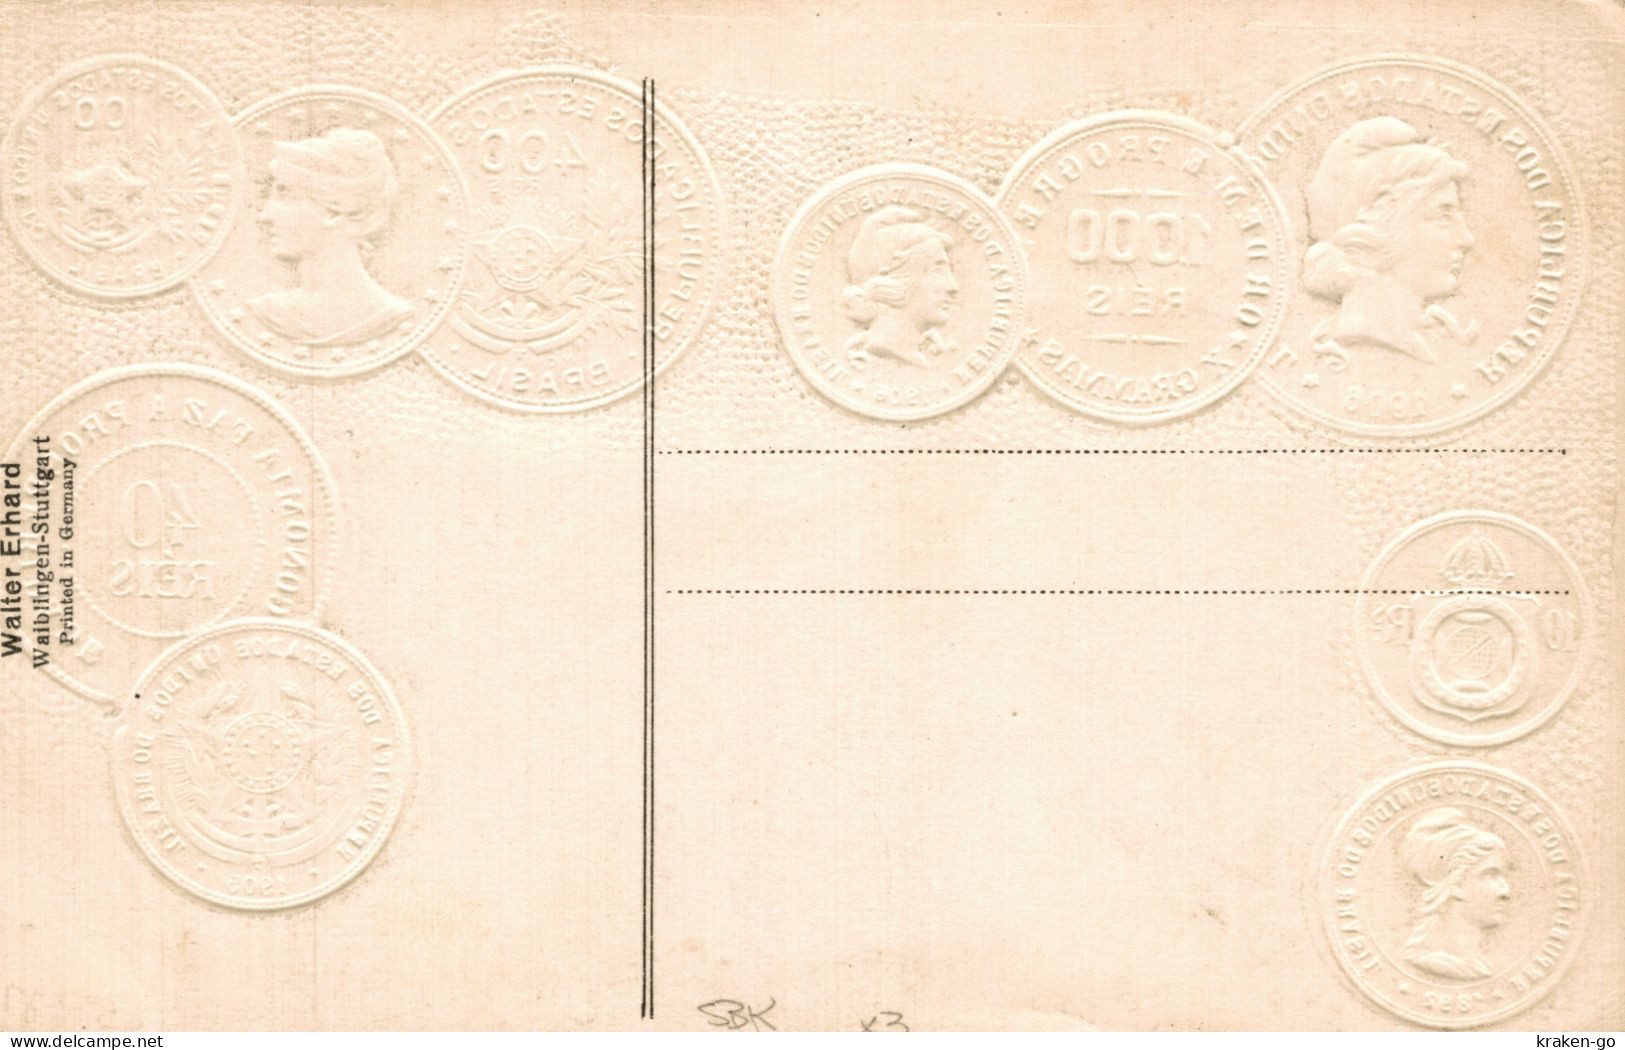 MONETE Del BRASILE - COINS Of BRAZIL - #064 - Münzen (Abb.)